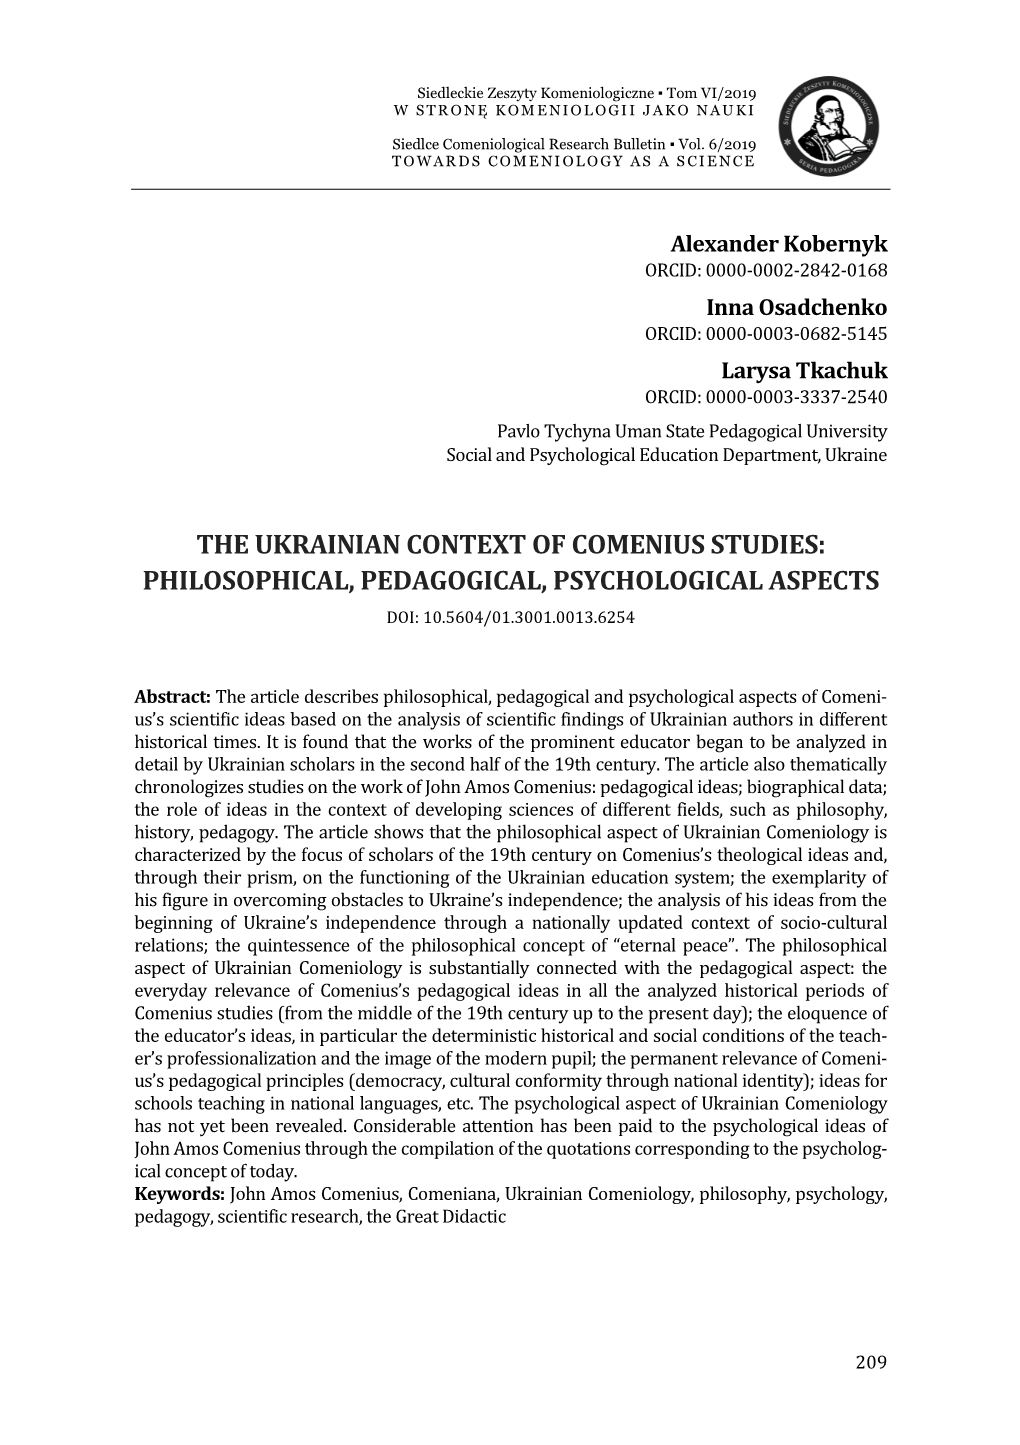 The Ukrainian Context of Comenius Studies: Philosophical, Pedagogical, Psychological Aspects